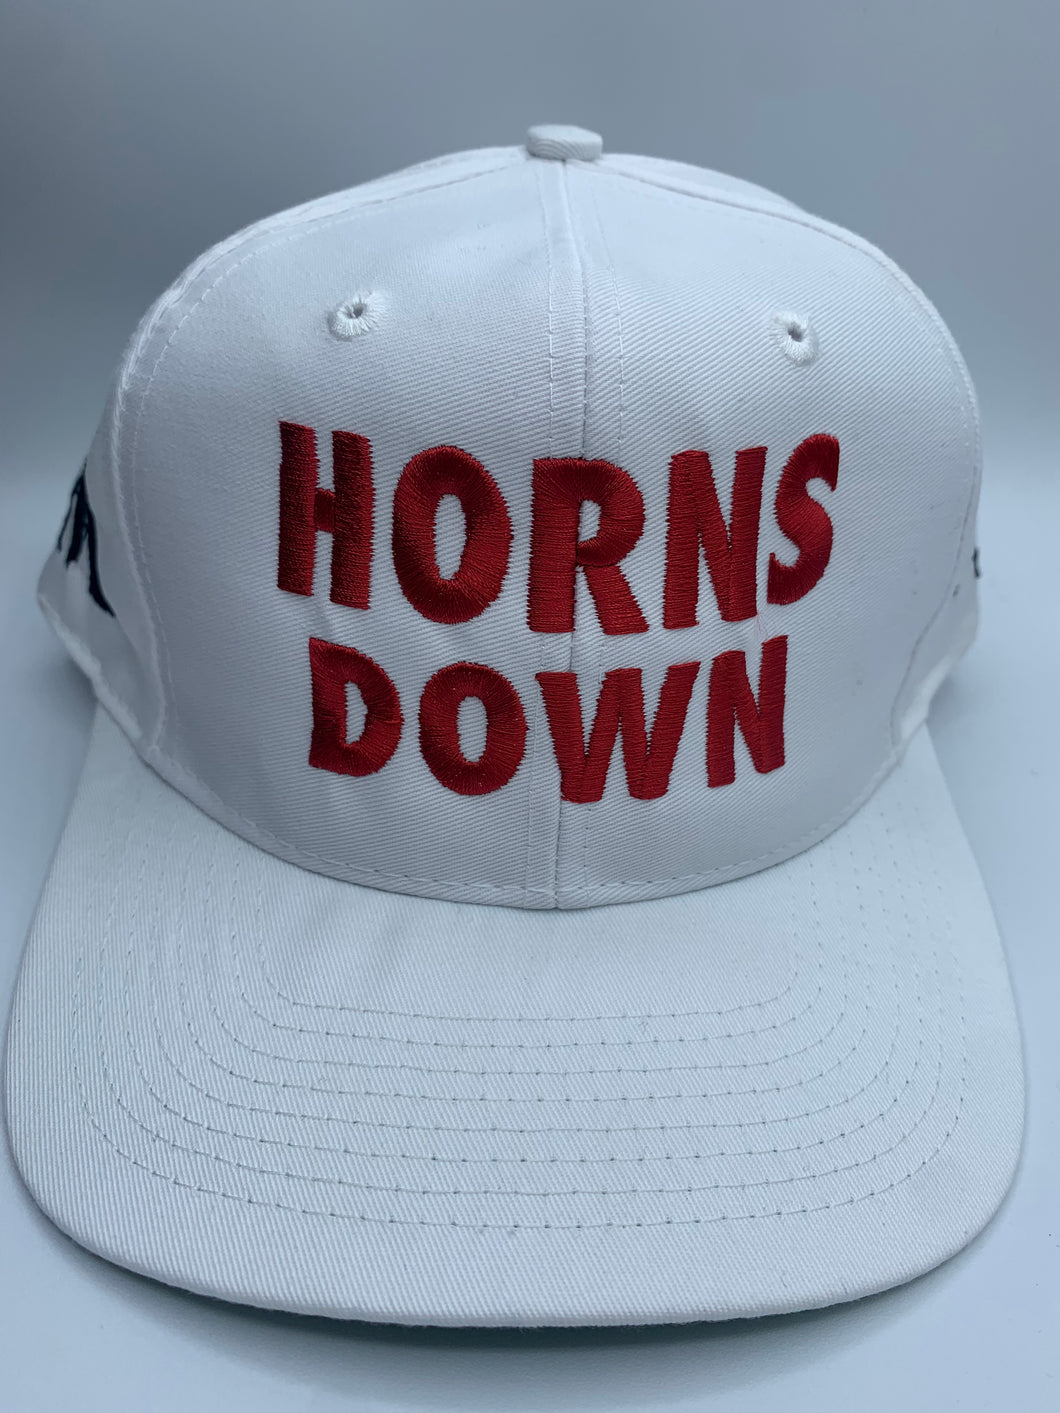 Horns Down Limited Edition Vintage Snapback Hat